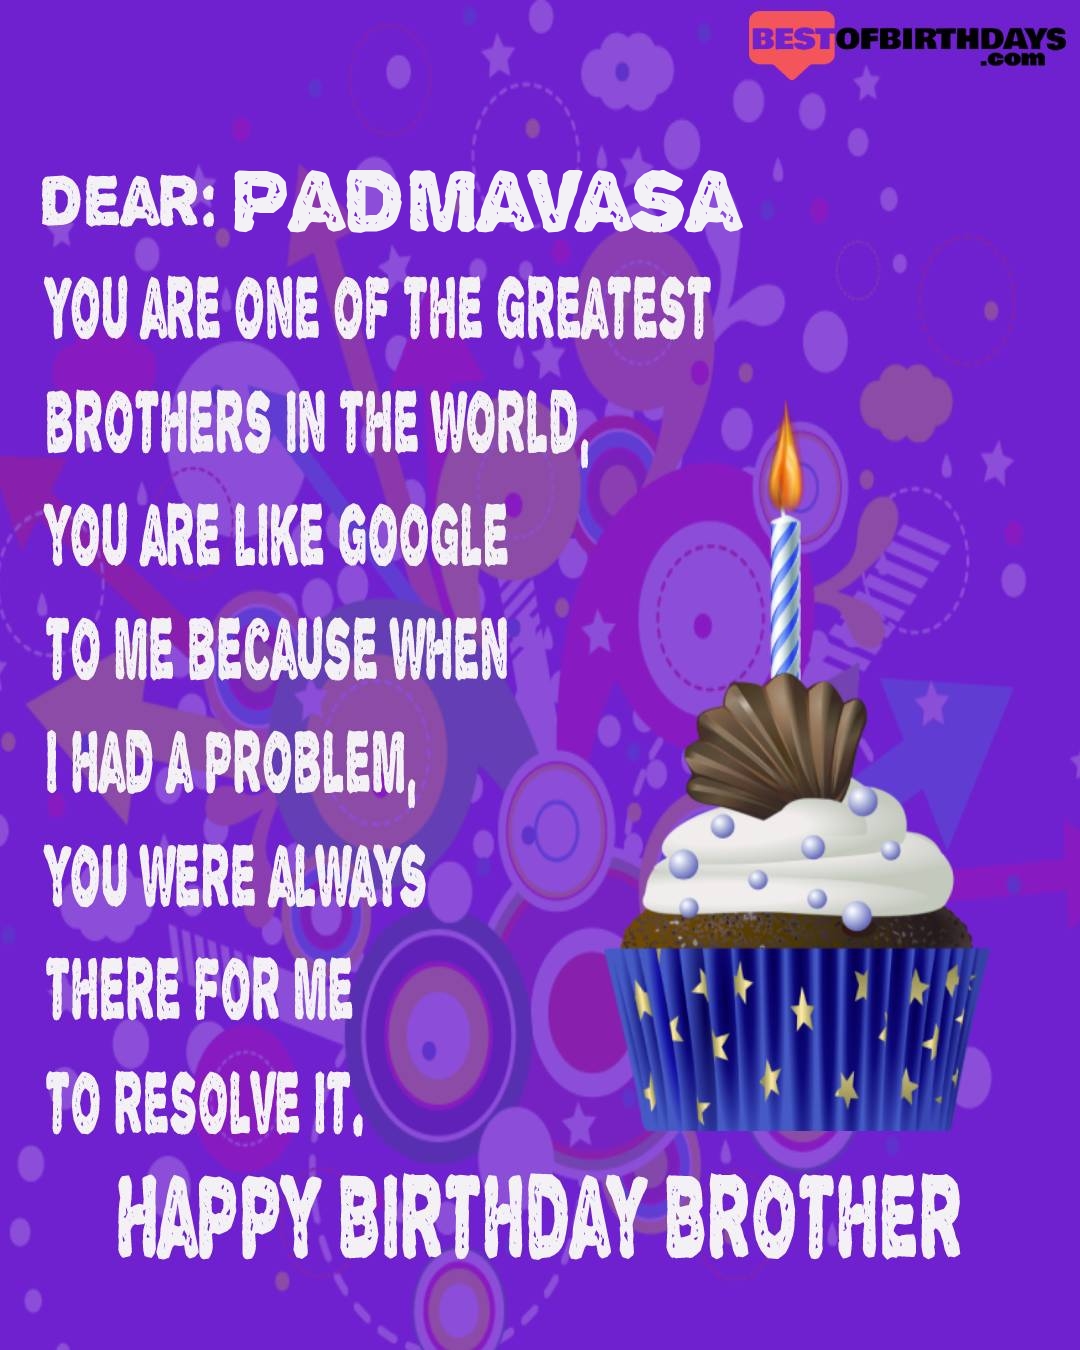 Happy birthday padmavasa bhai brother bro